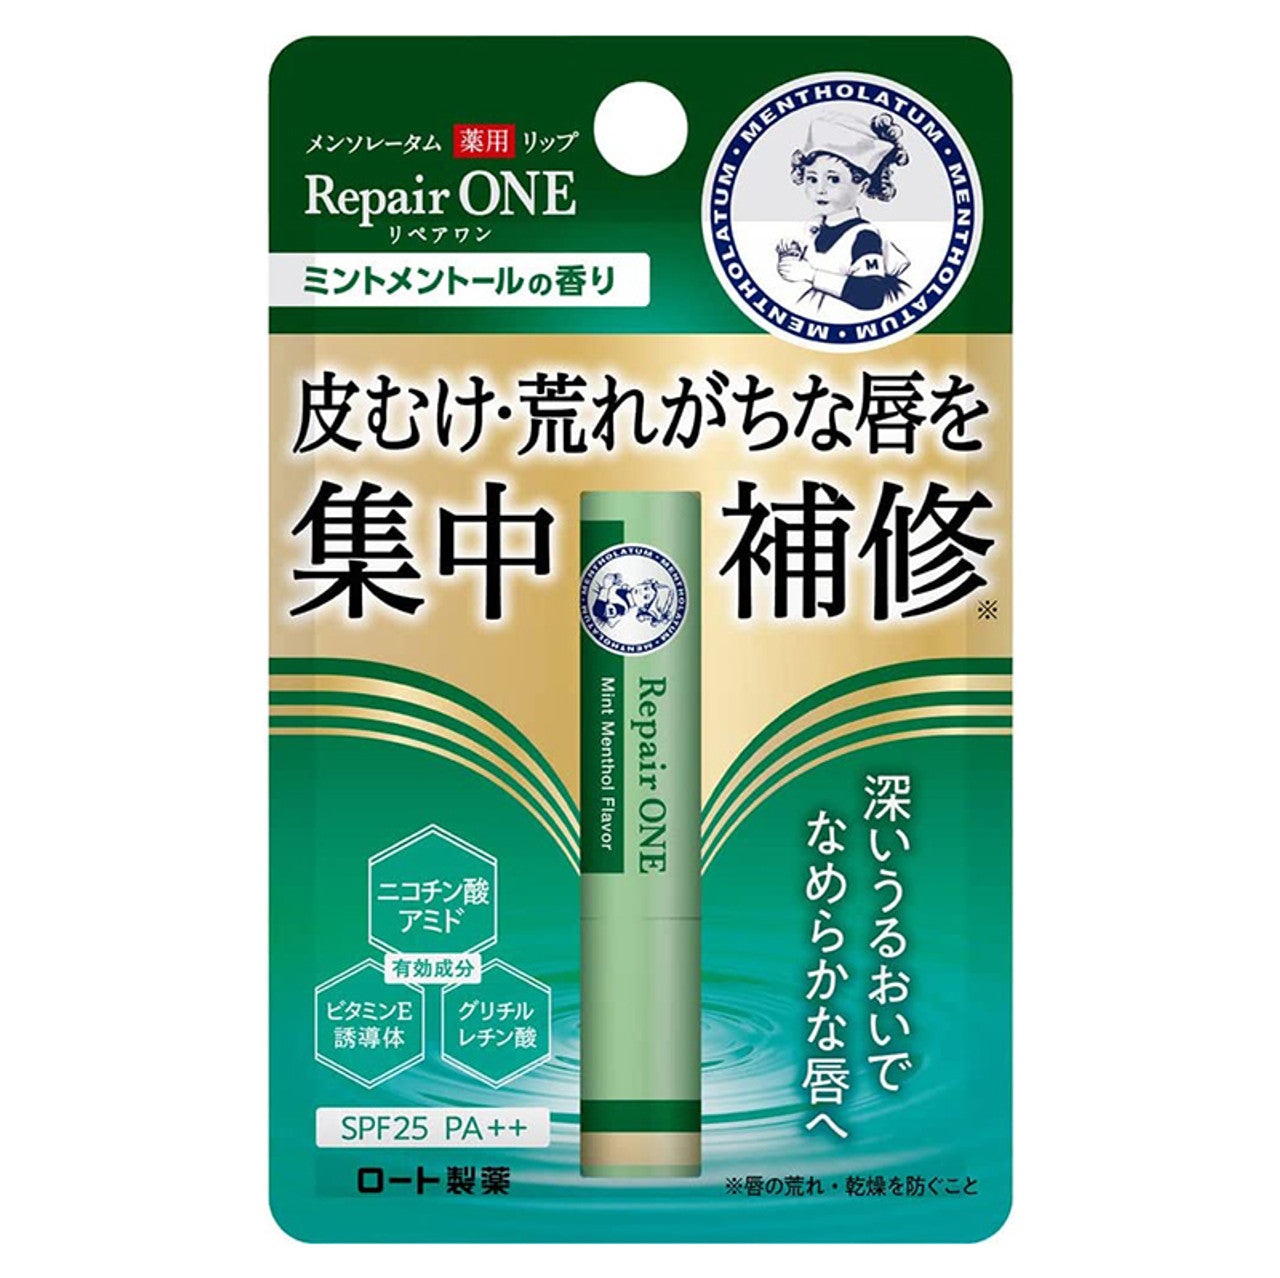 Rohto Mentholatum Repair One Lip Balm SPF 25 PA++ Mint Menthol